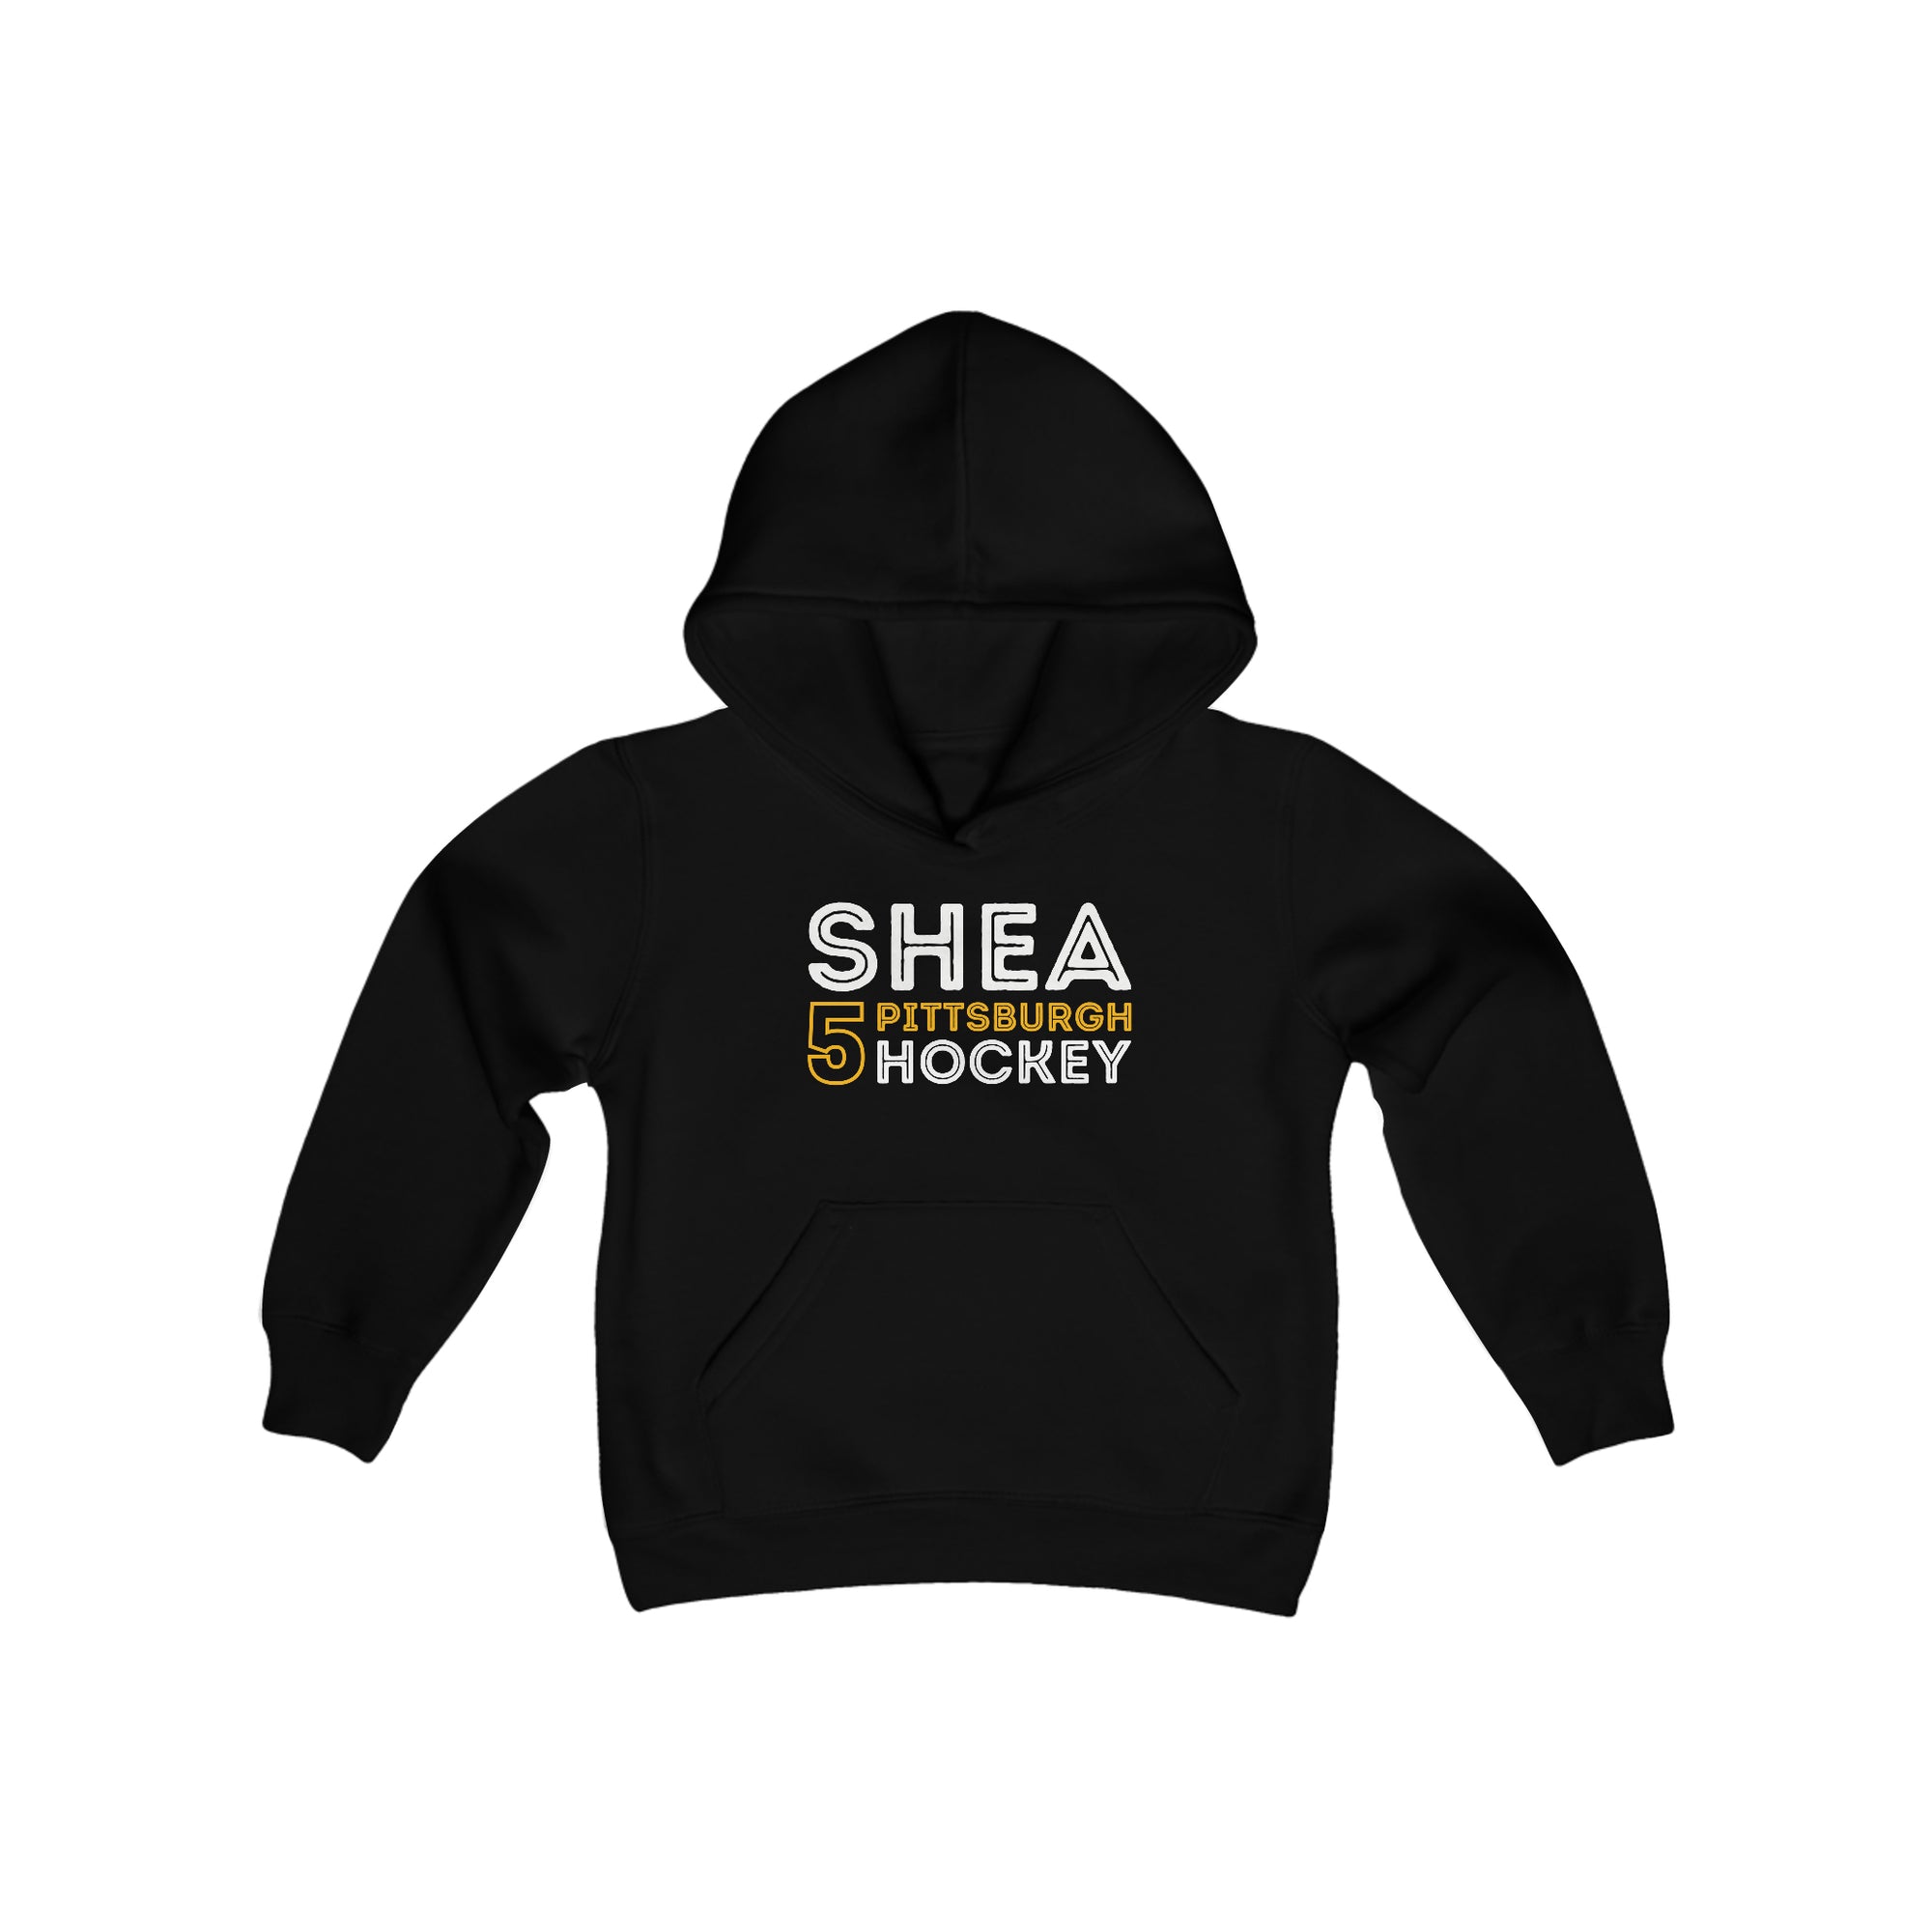 Shea 5 Pittsburgh Hockey Grafitti Wall Design Youth Hooded Sweatshirt